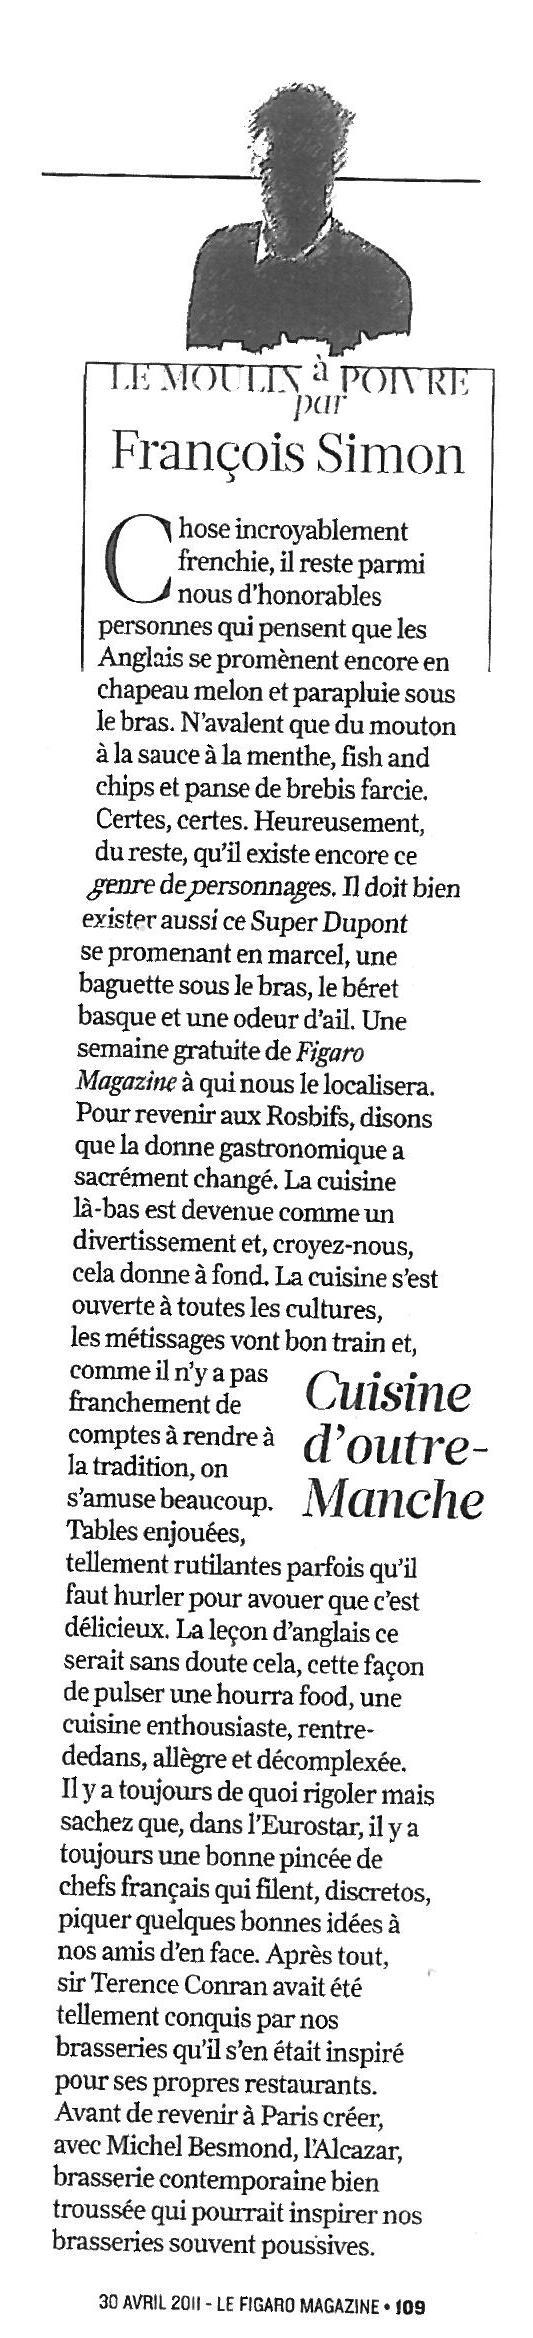 La Presse en parle – François Simon – le Figaro Magazine – 30 avril 2011